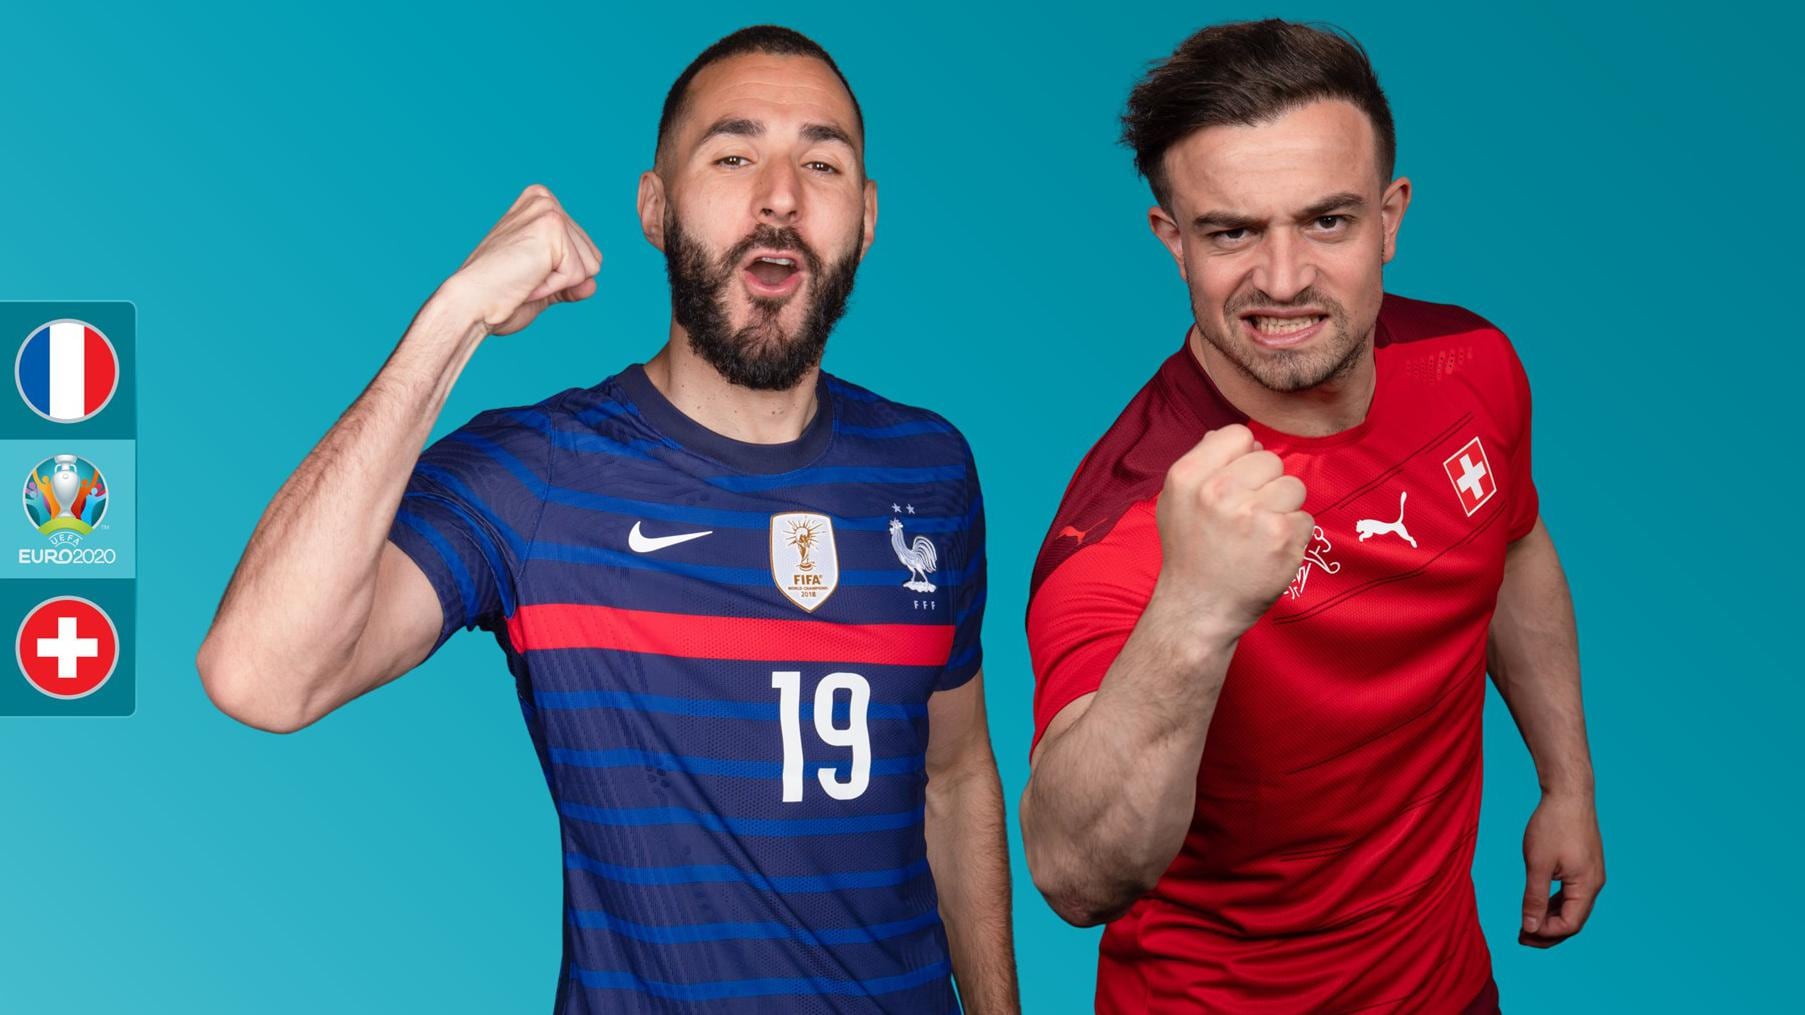 France vs switzerland head to head